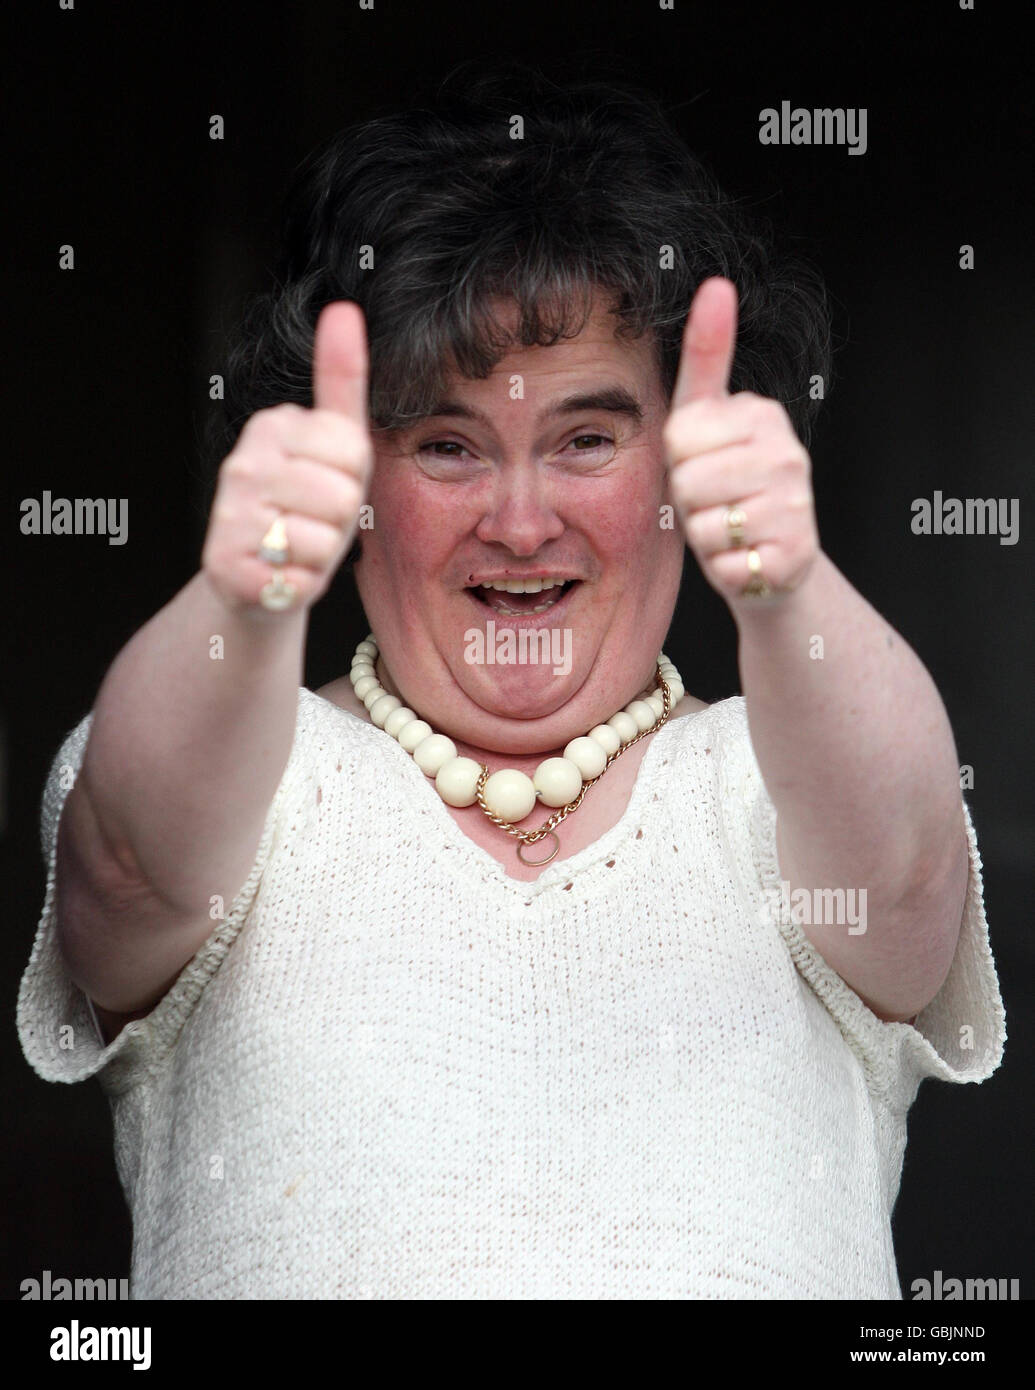 Britain's Got Talent star Susan Boyle at her front door in Blackburn, West Lothian. Stock Photo